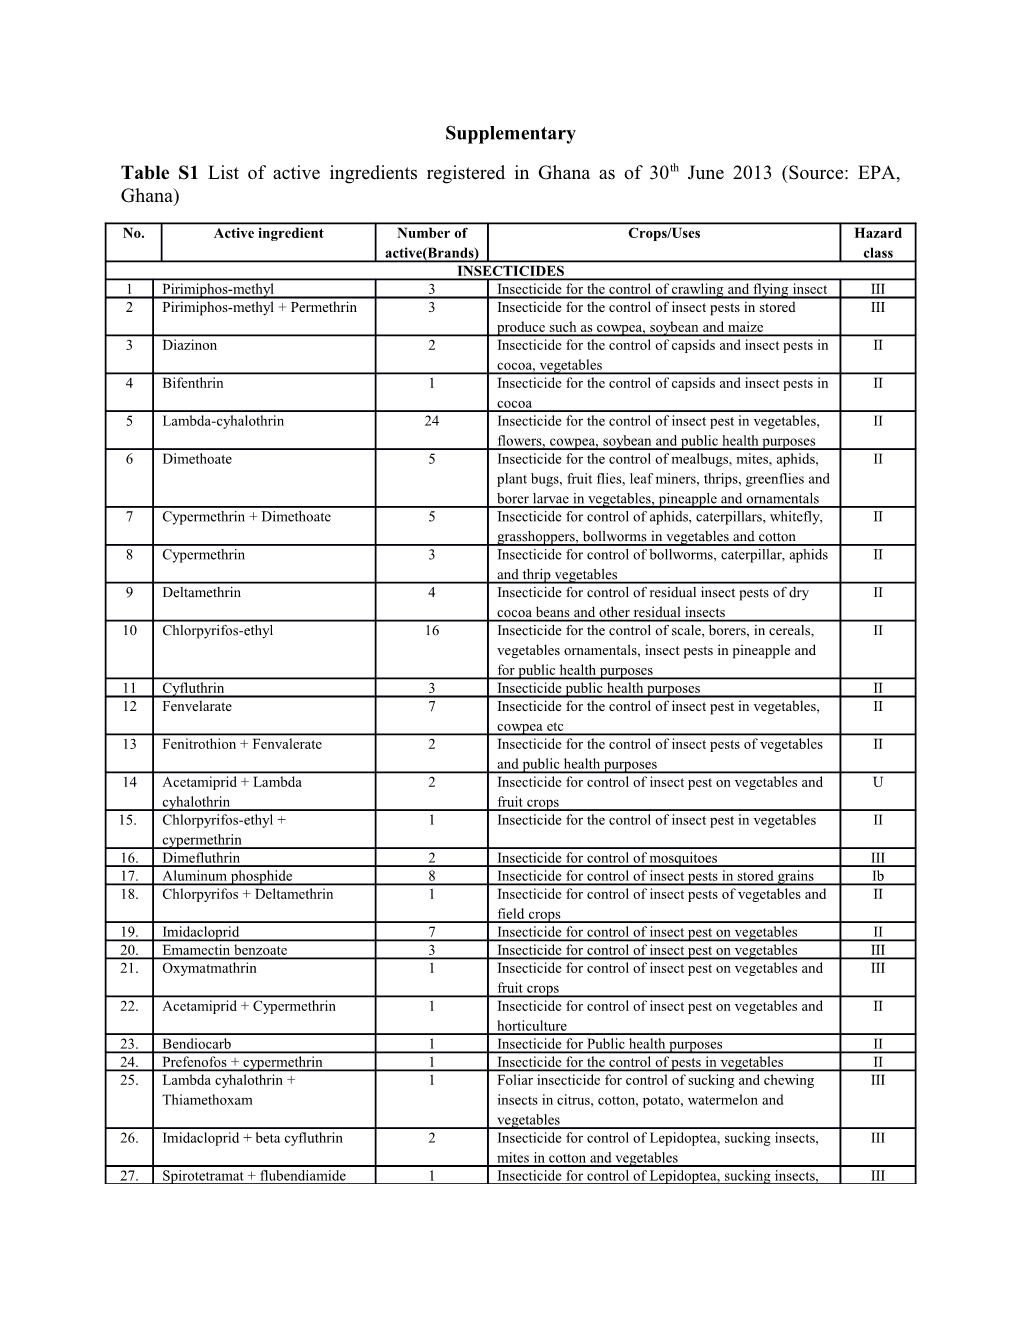 Table S1list of Active Ingredients Registered in Ghana As of 30Th June 2013 (Source: EPA, Ghana)